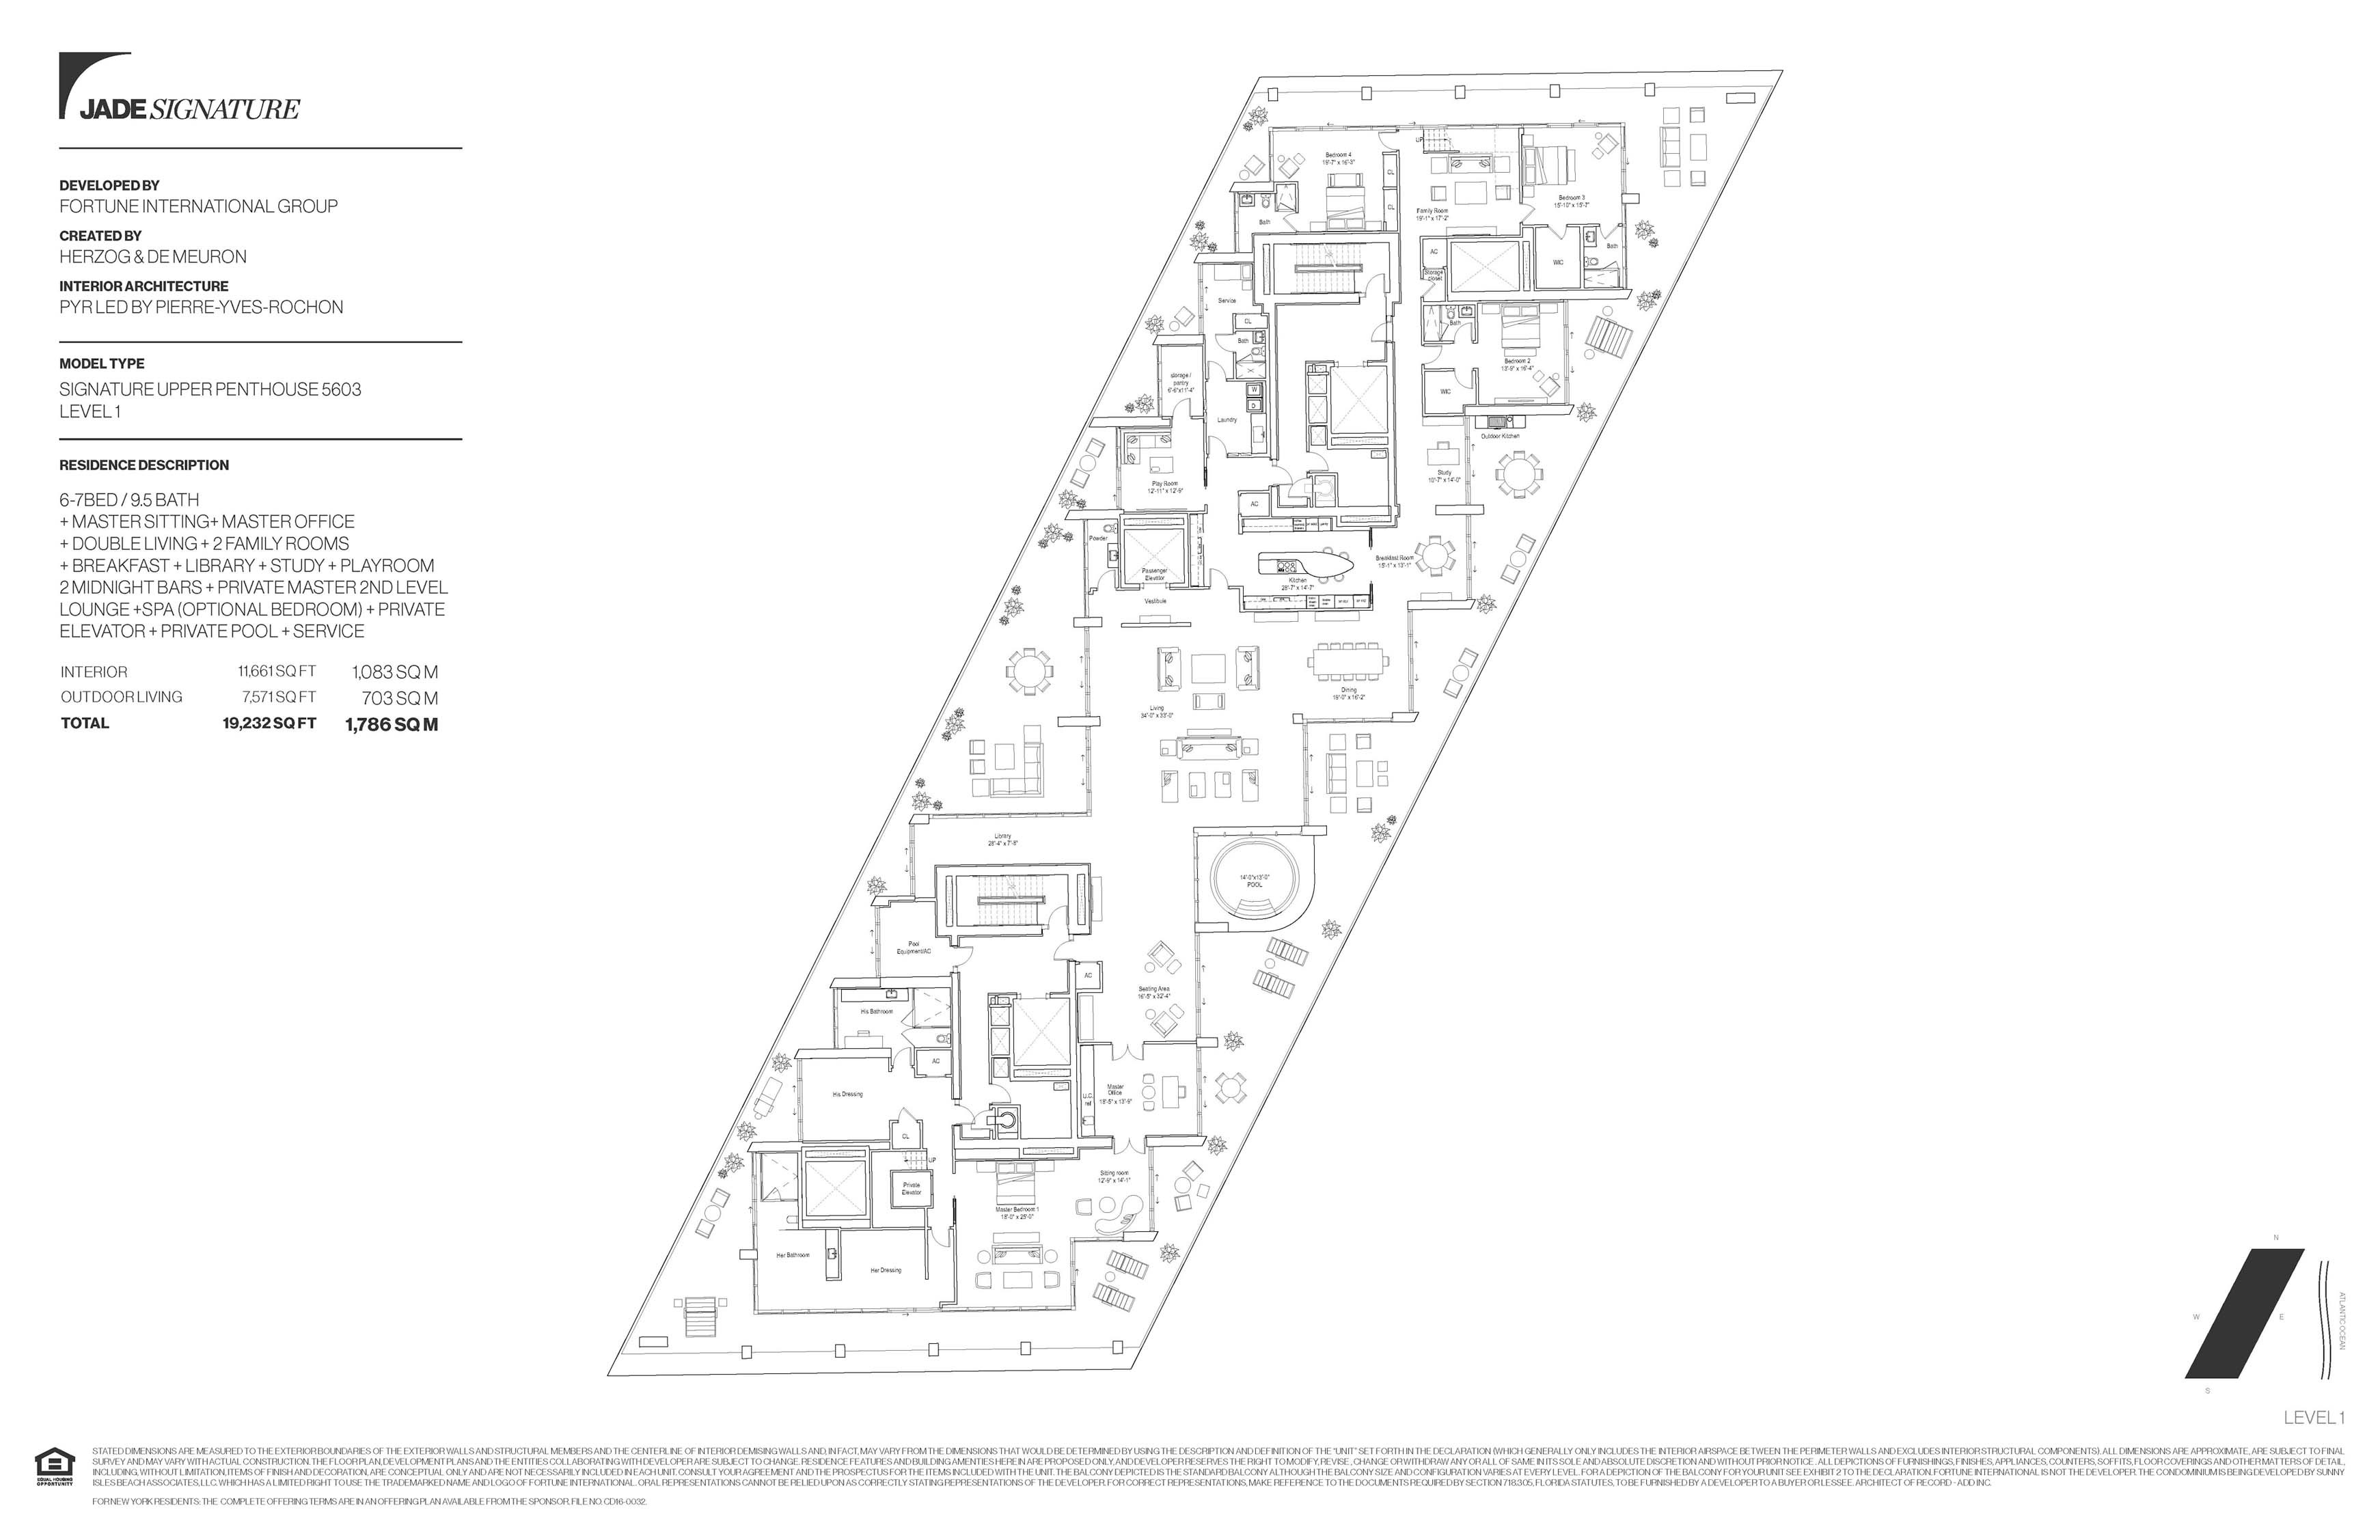 Floor Plan for Jade Signature Sunny Isles Floorplans, Signature Upper Penthouse 5603